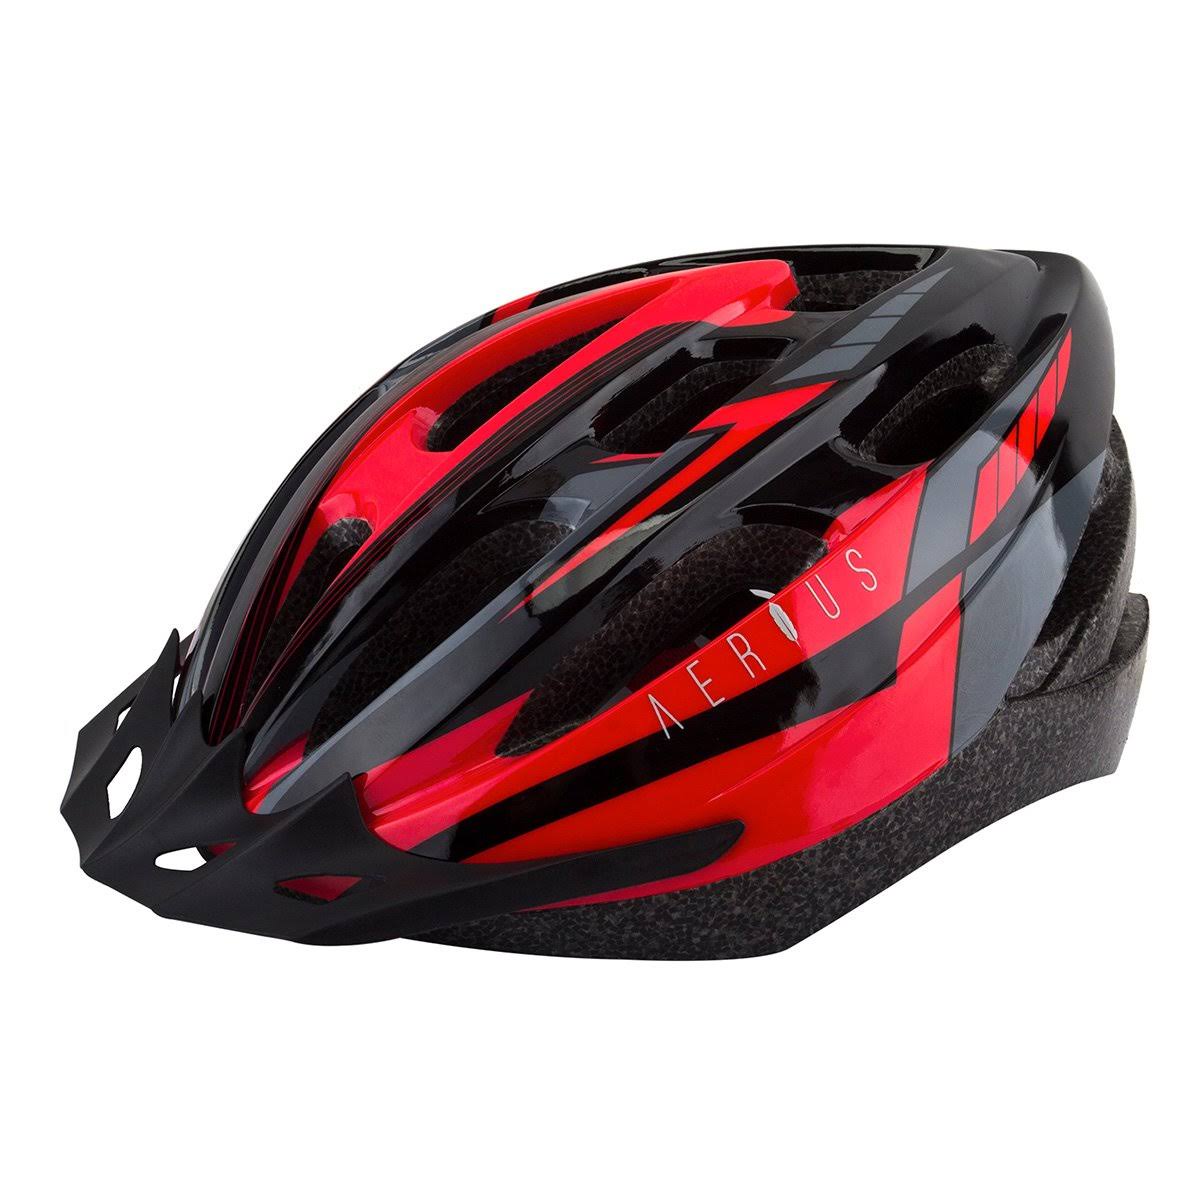 Aerius V19-Sport Helmet - Black/Red SM/MD